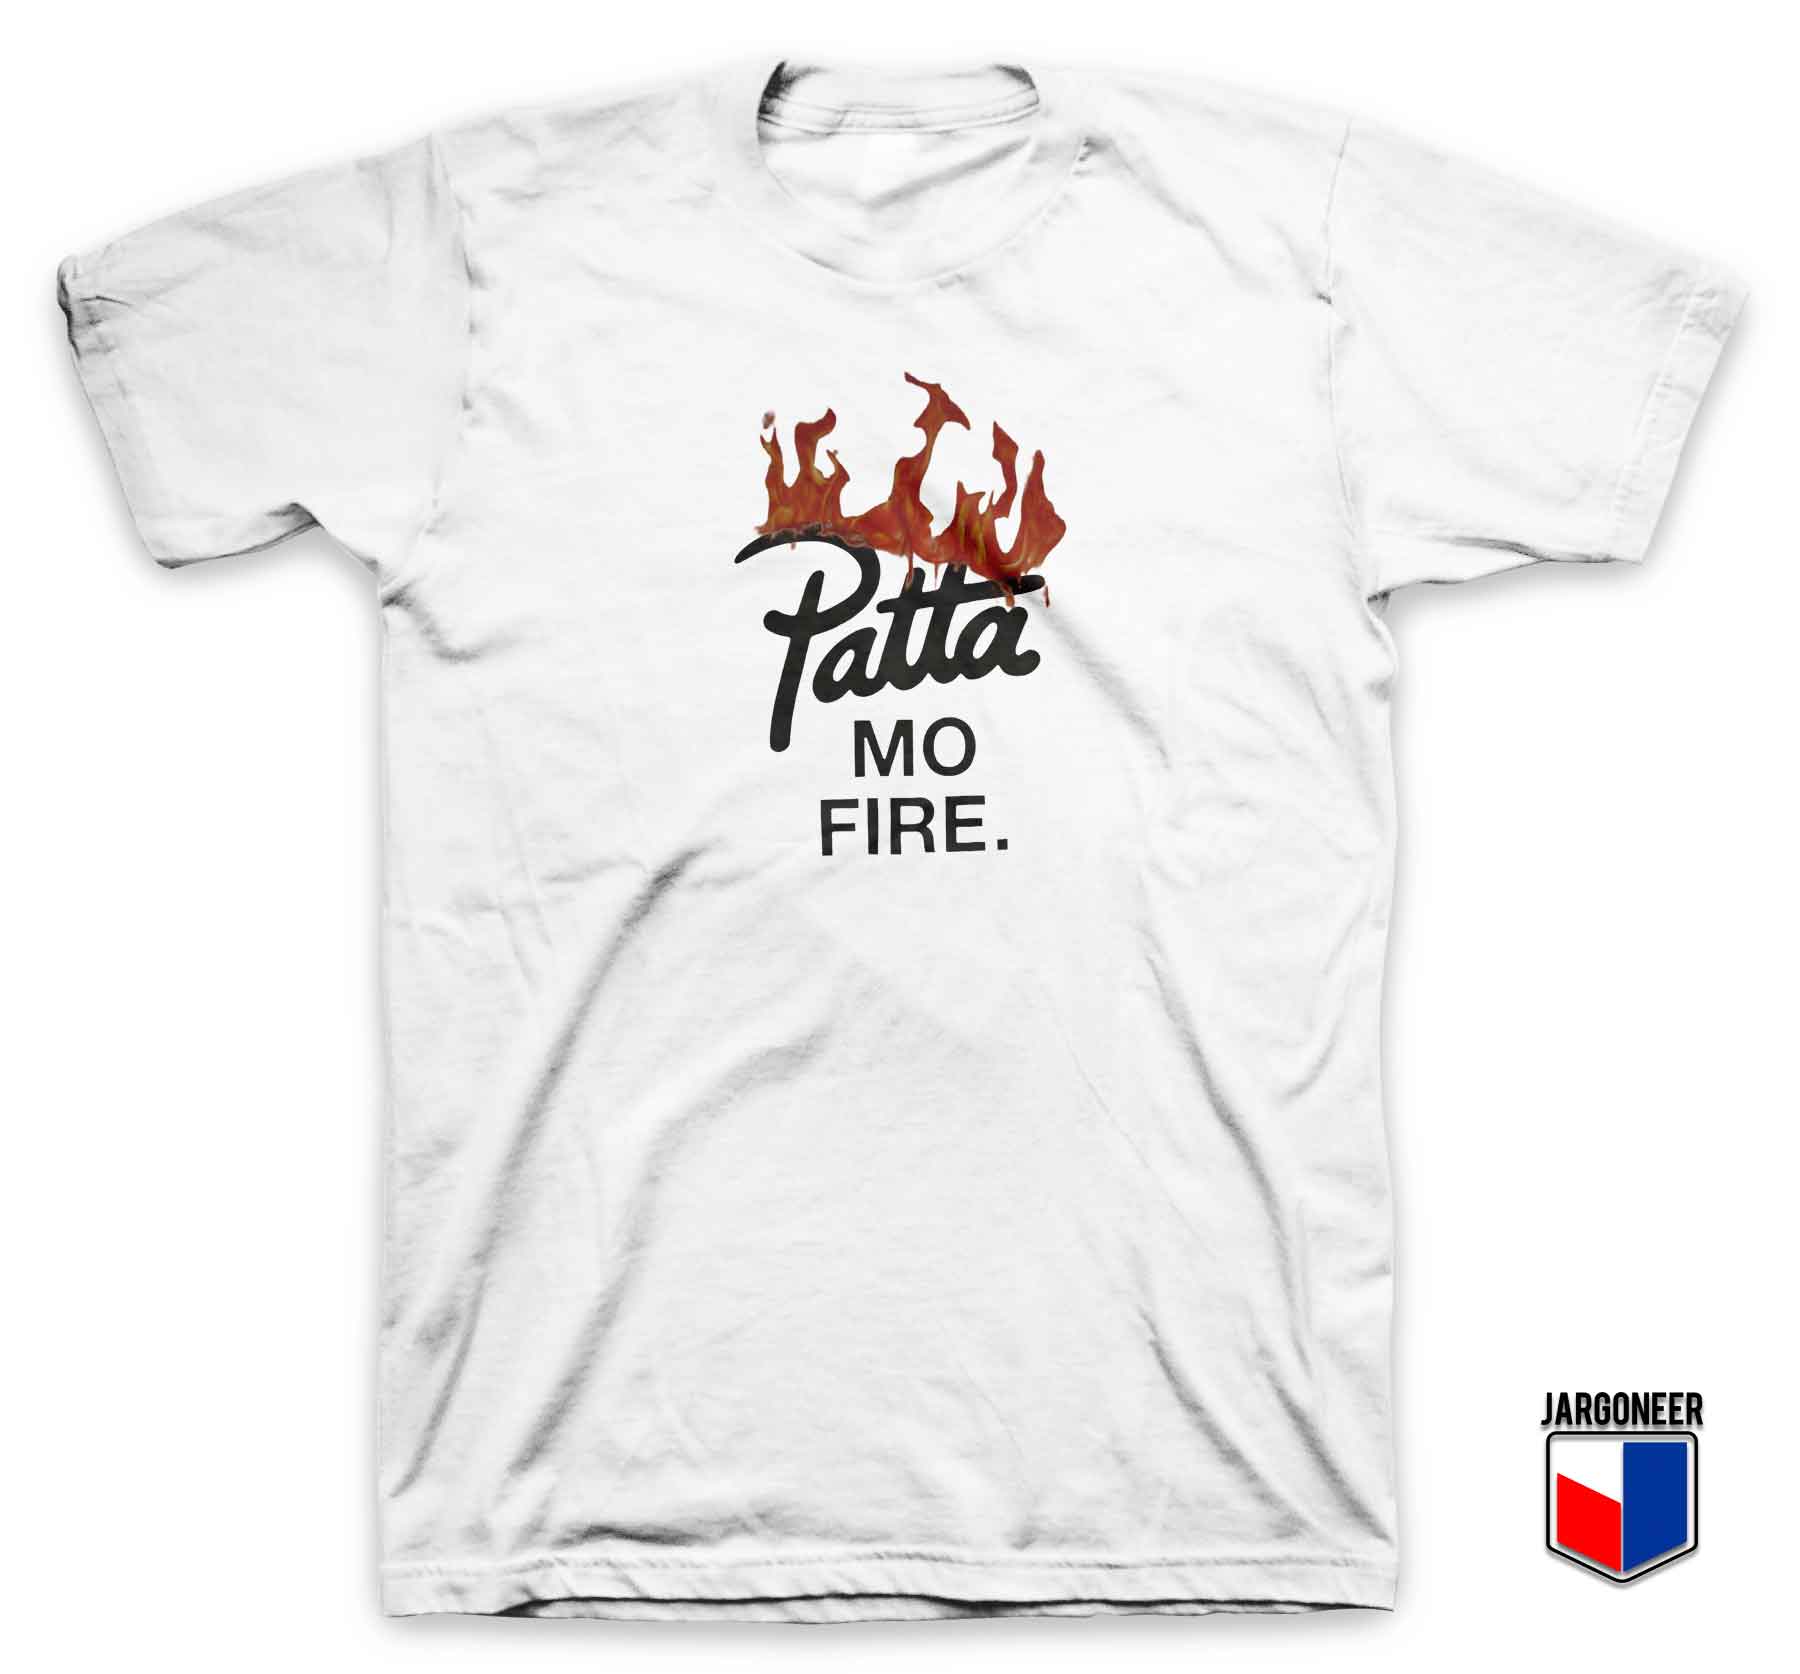 Patta Mo Fire - Shop Unique Graphic Cool Shirt Designs